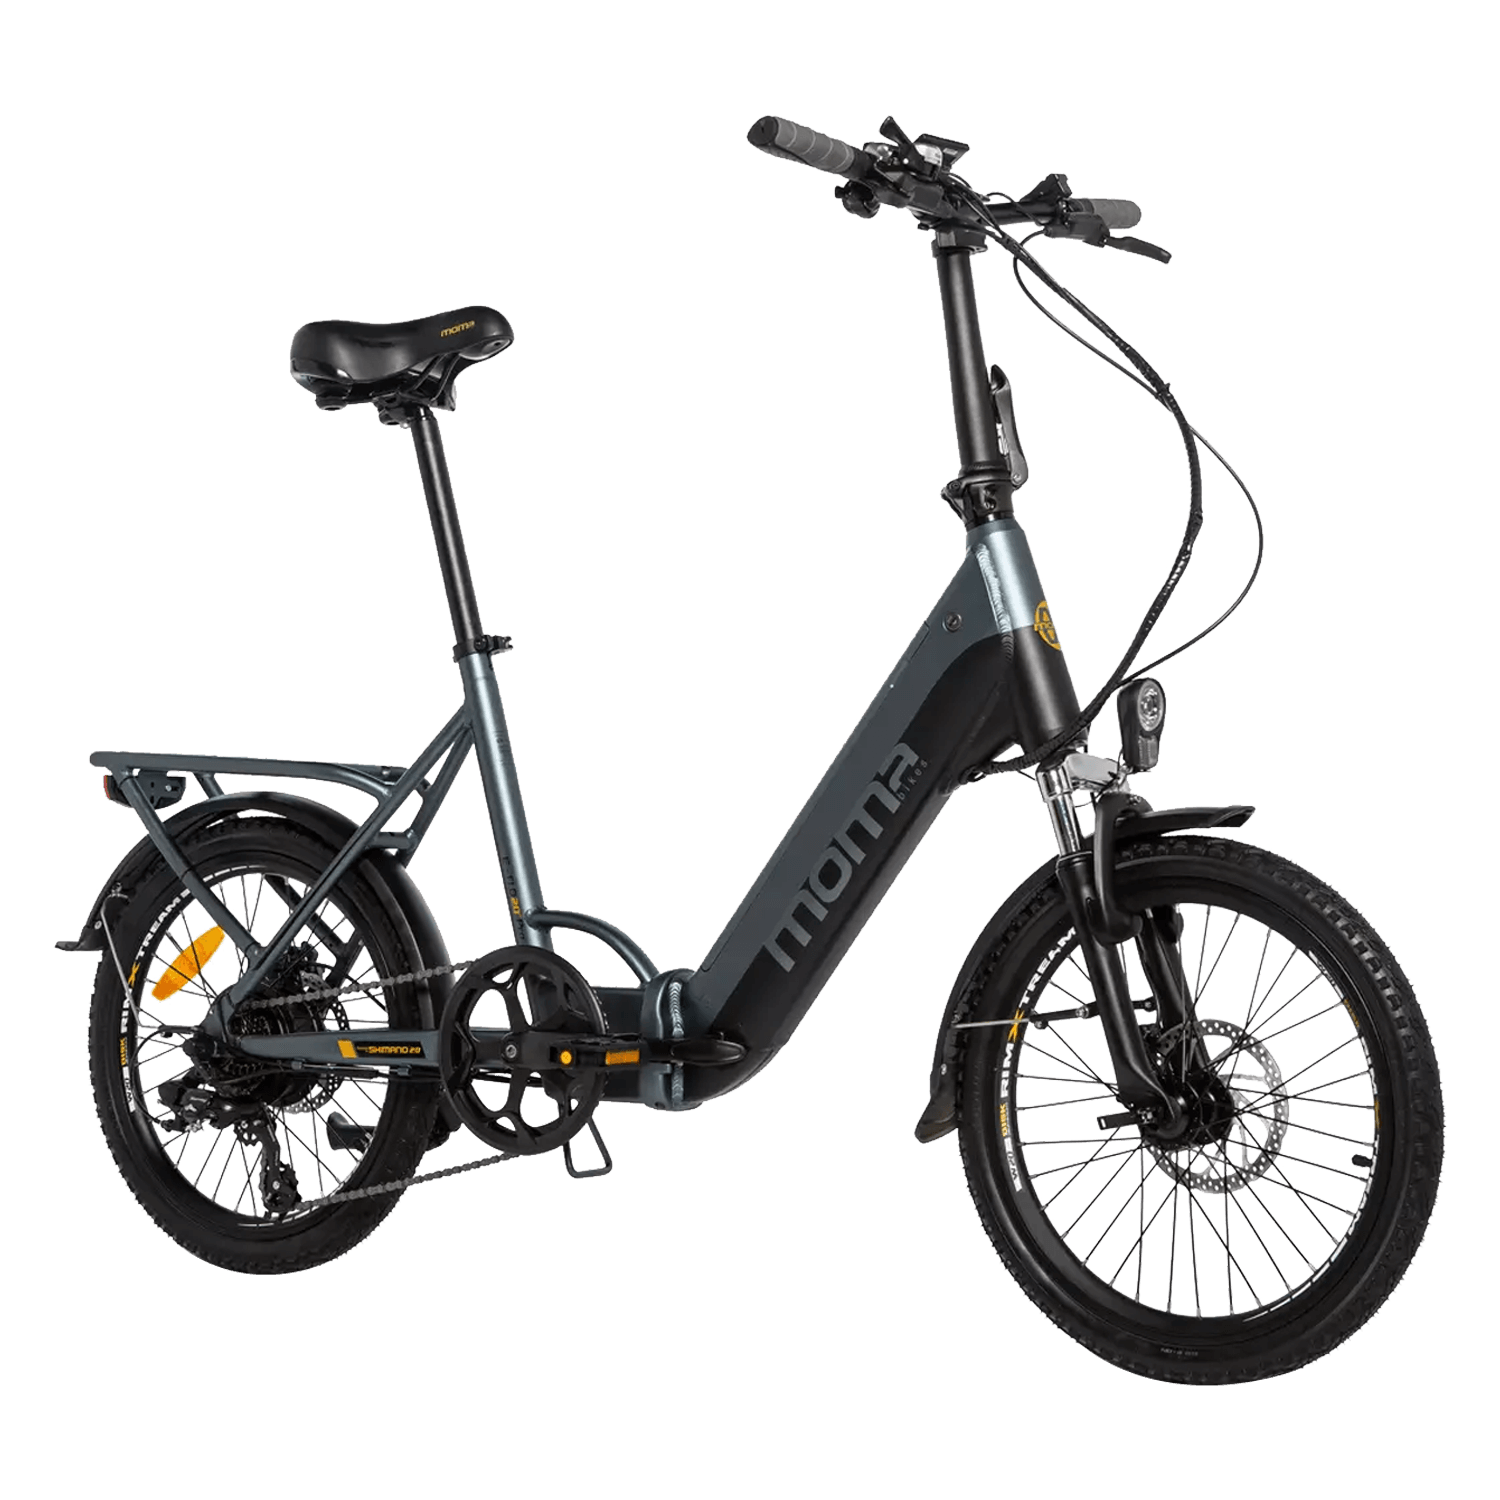 Moma Bikes Bicicleta electrica ebike 20pro aluminio shimano 7v litio integrada y extraible 48v 13ah ion de plegable bateria